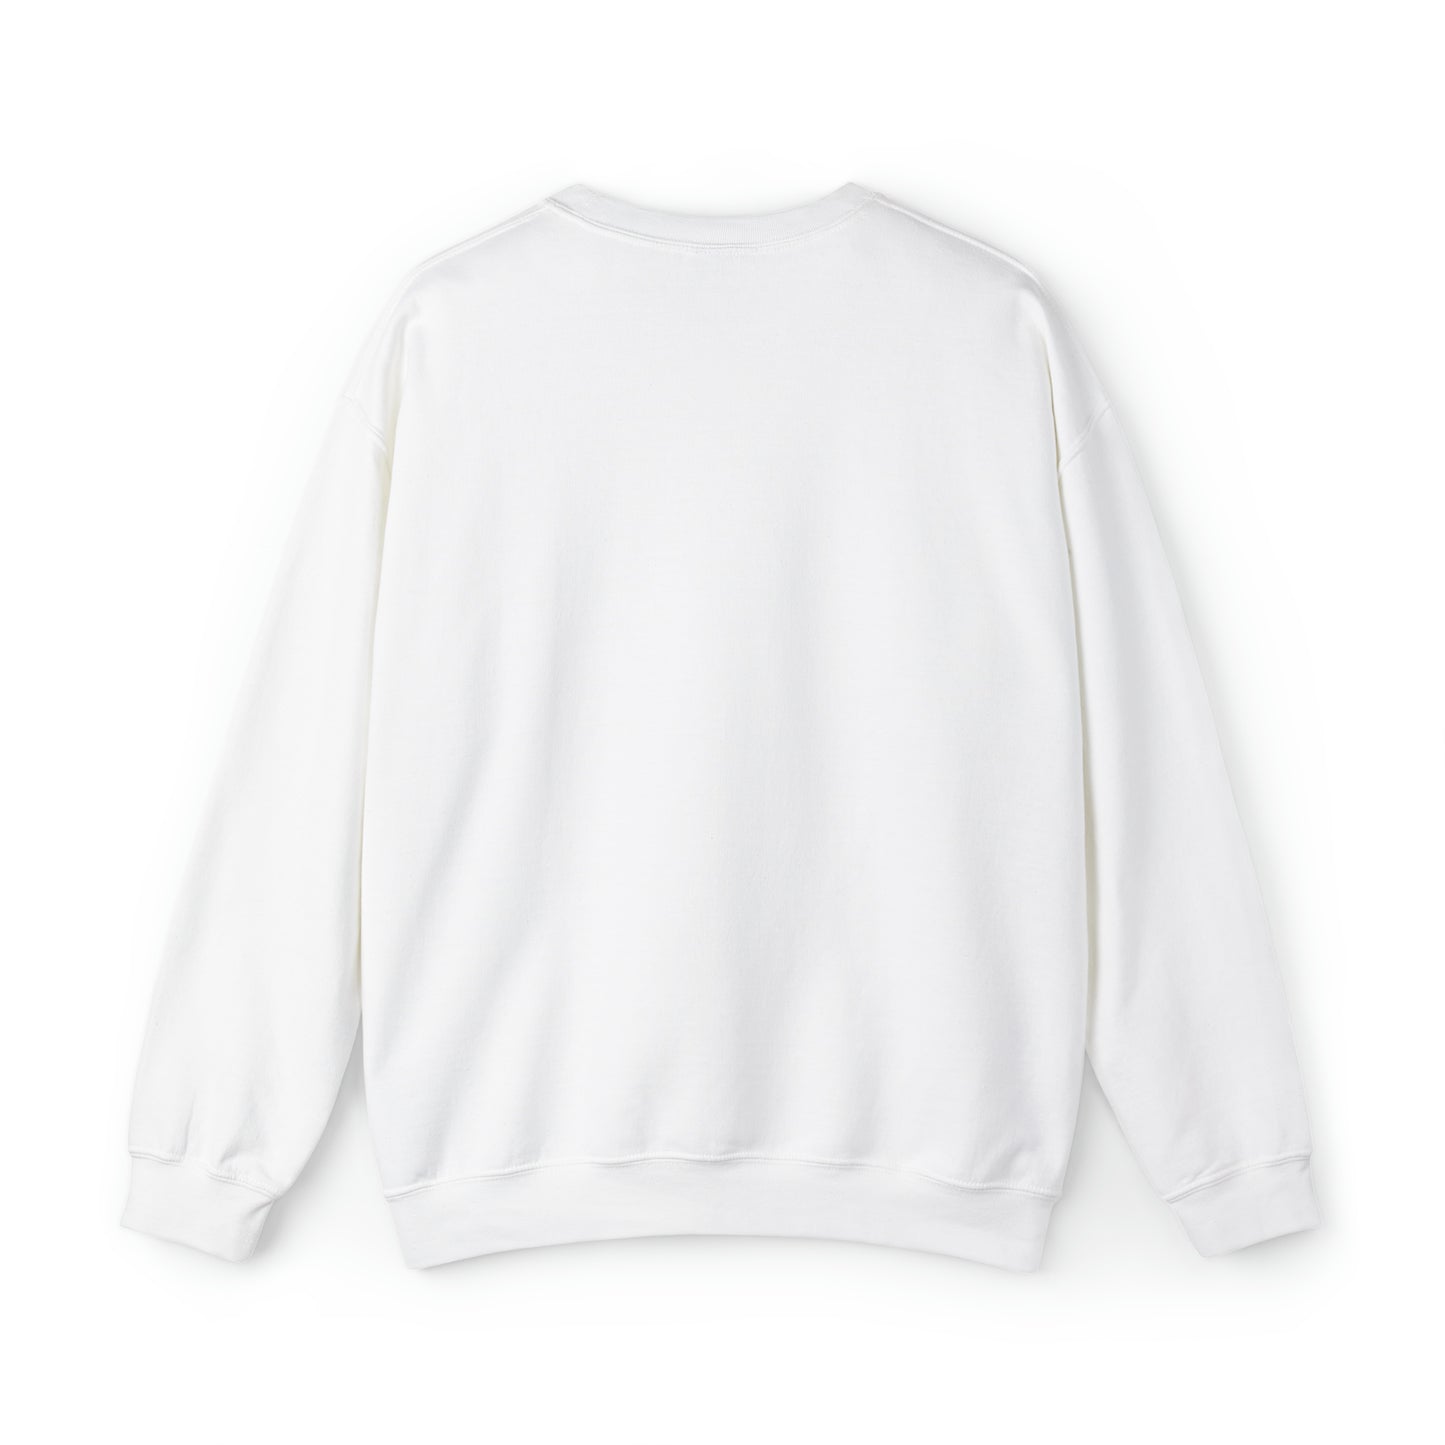 Unisex Heavy Blend™ Crewneck Sweatshirt - Spreading Kindness Swirl